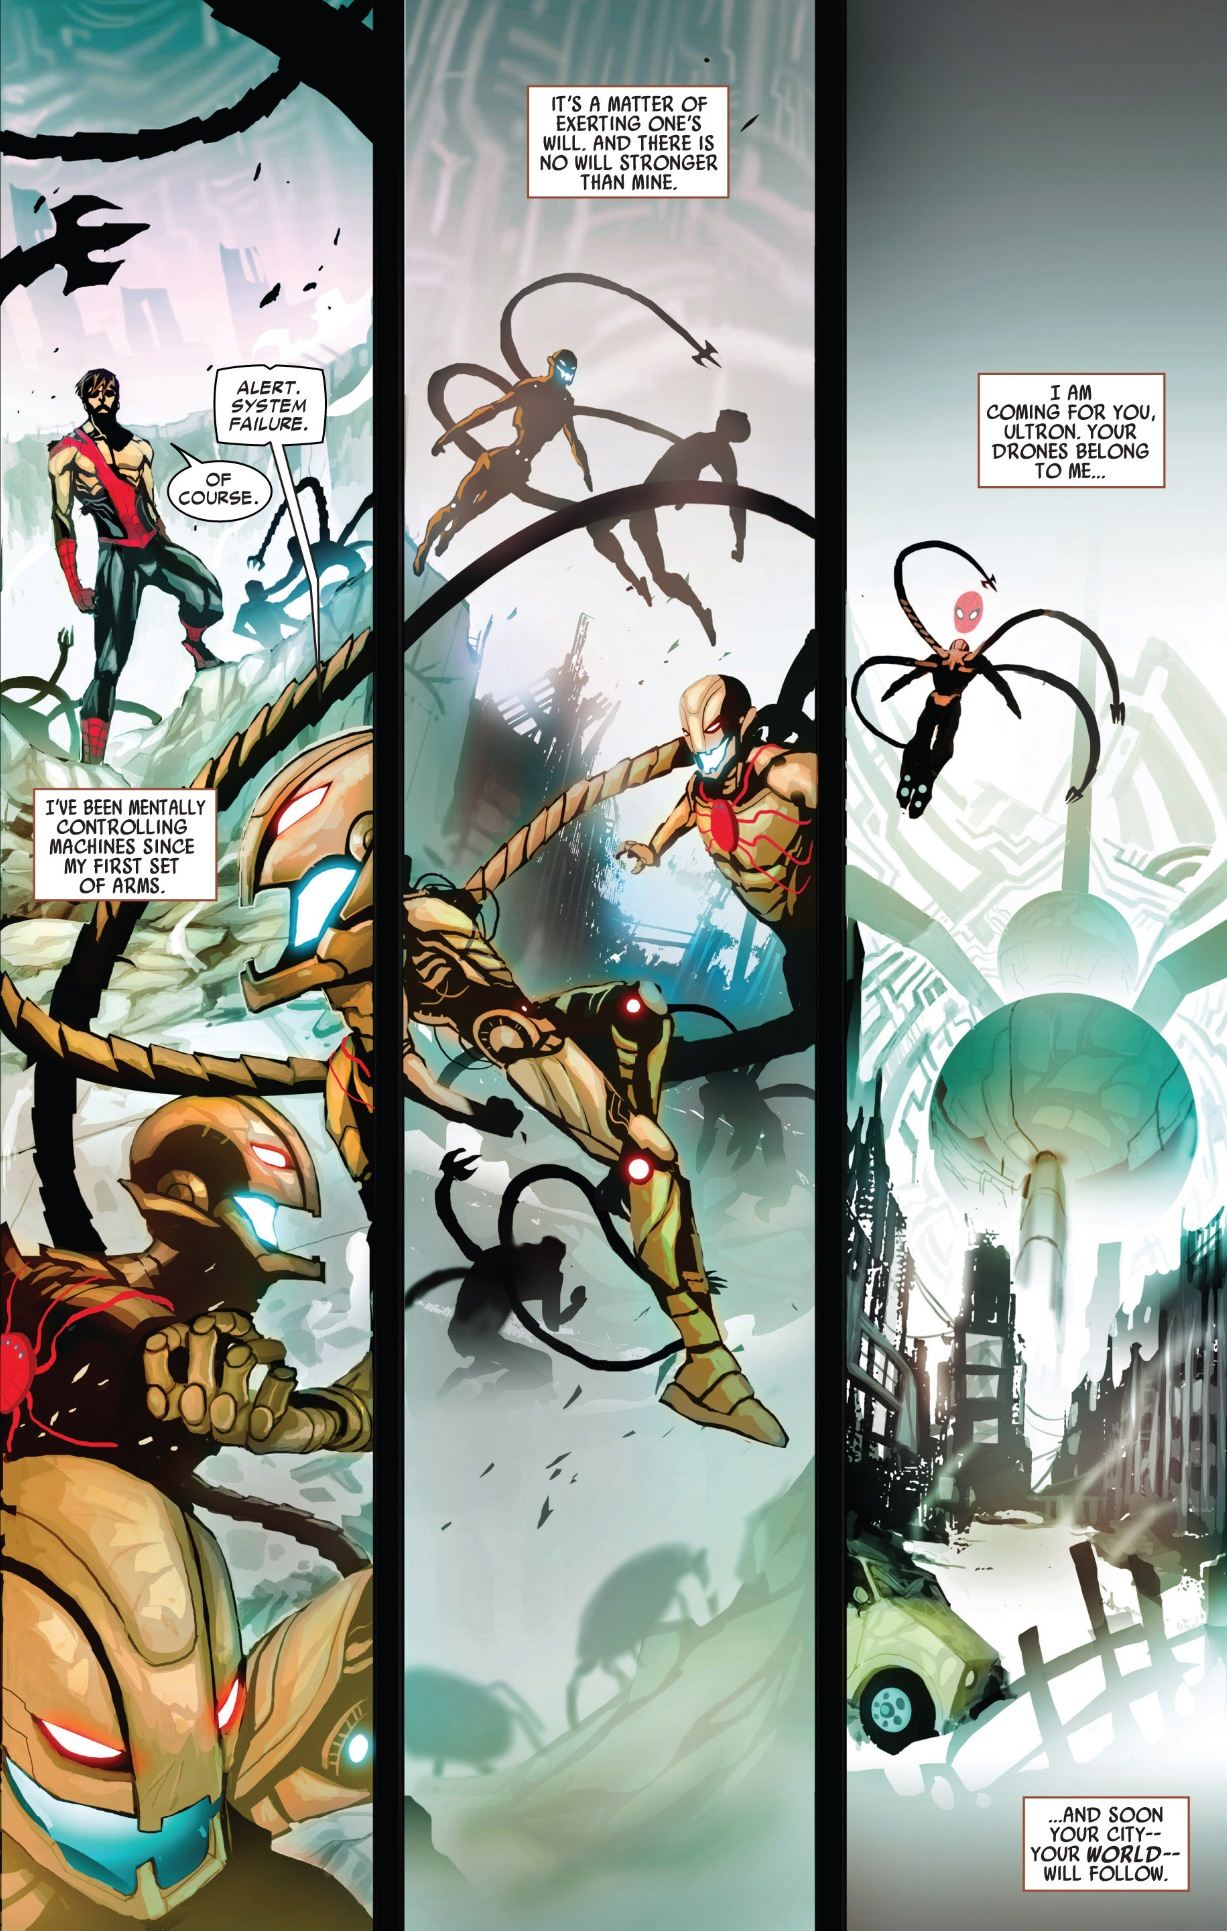 New Issues: Superior Spider-Man #6U